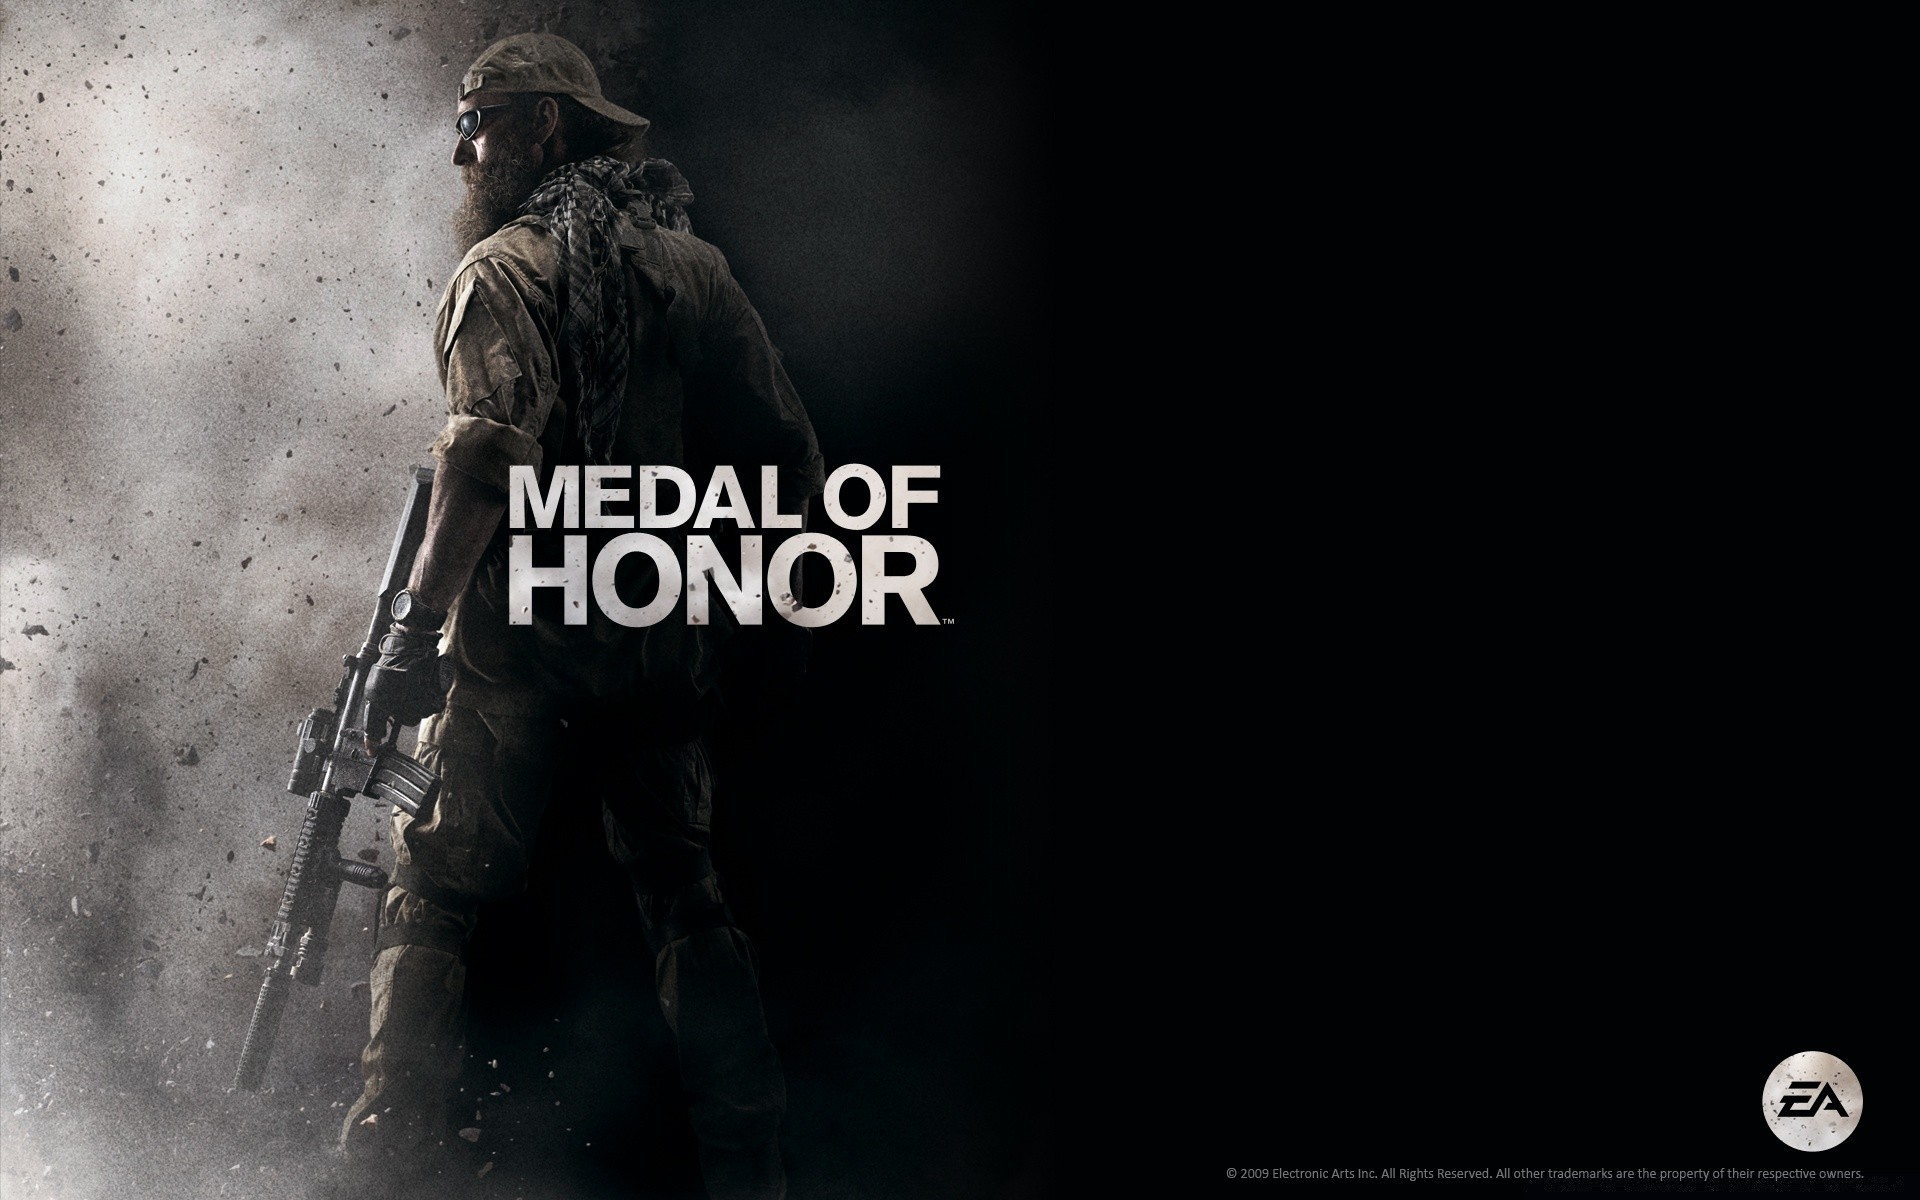 Medal of honor трейнер. Игра Medal of Honor Warfighter. Медаль оф хонор 2010 обои. Медаль за отвагу игра 2010. Игры Medal of Honor 2010 Limited.